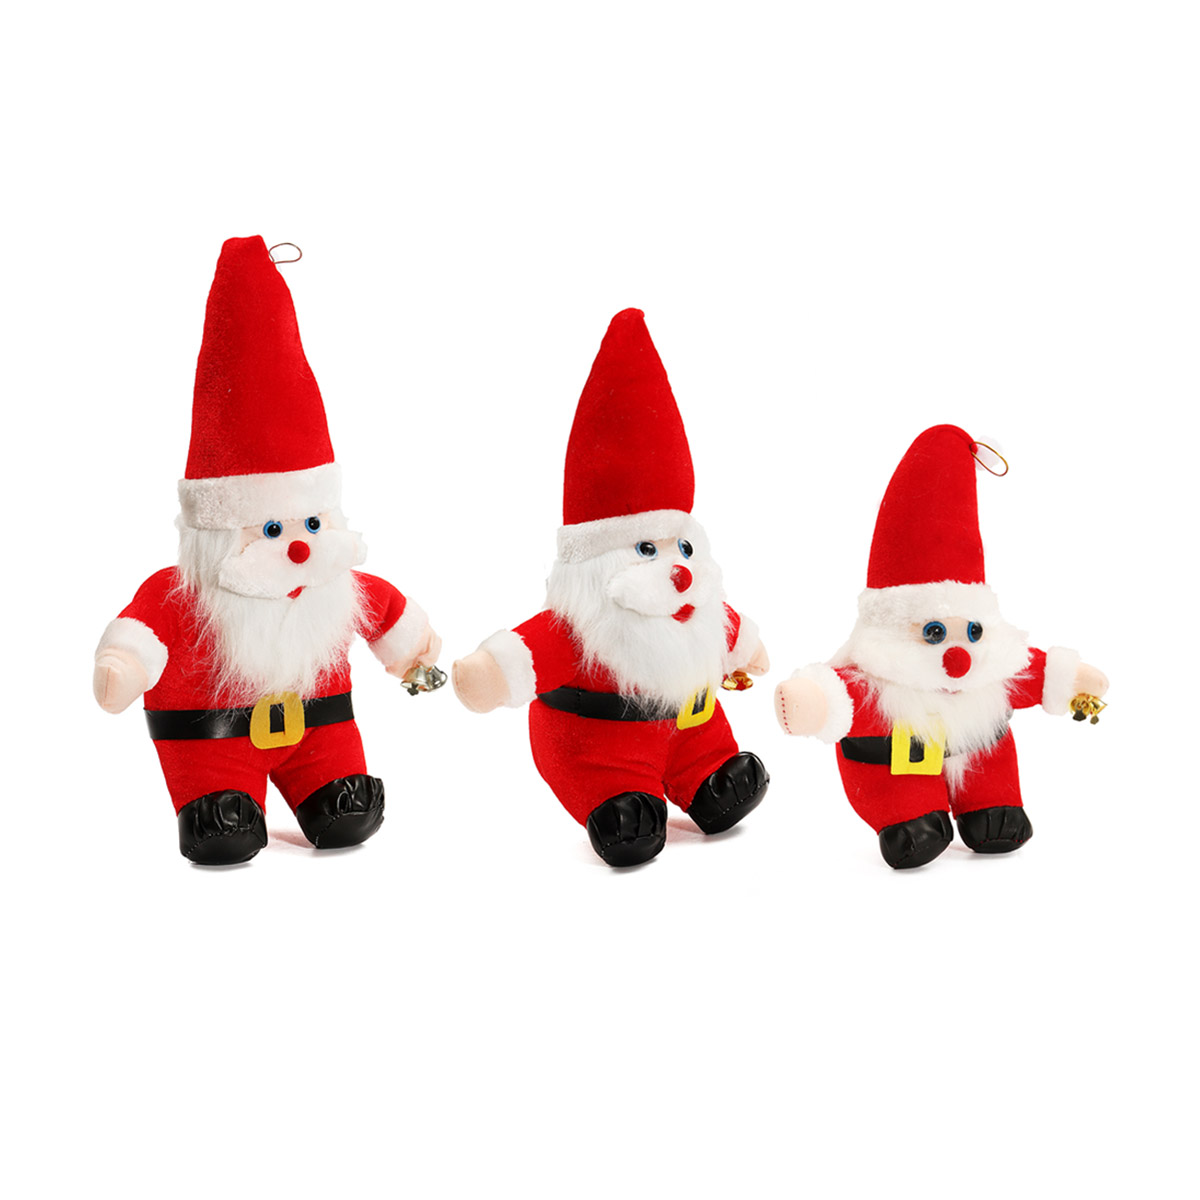 Christmas-Santa-Claus-Doll-Gift-Present-Xmas-Tree-Hanging-Ornament-Home-Decor-1087849-5